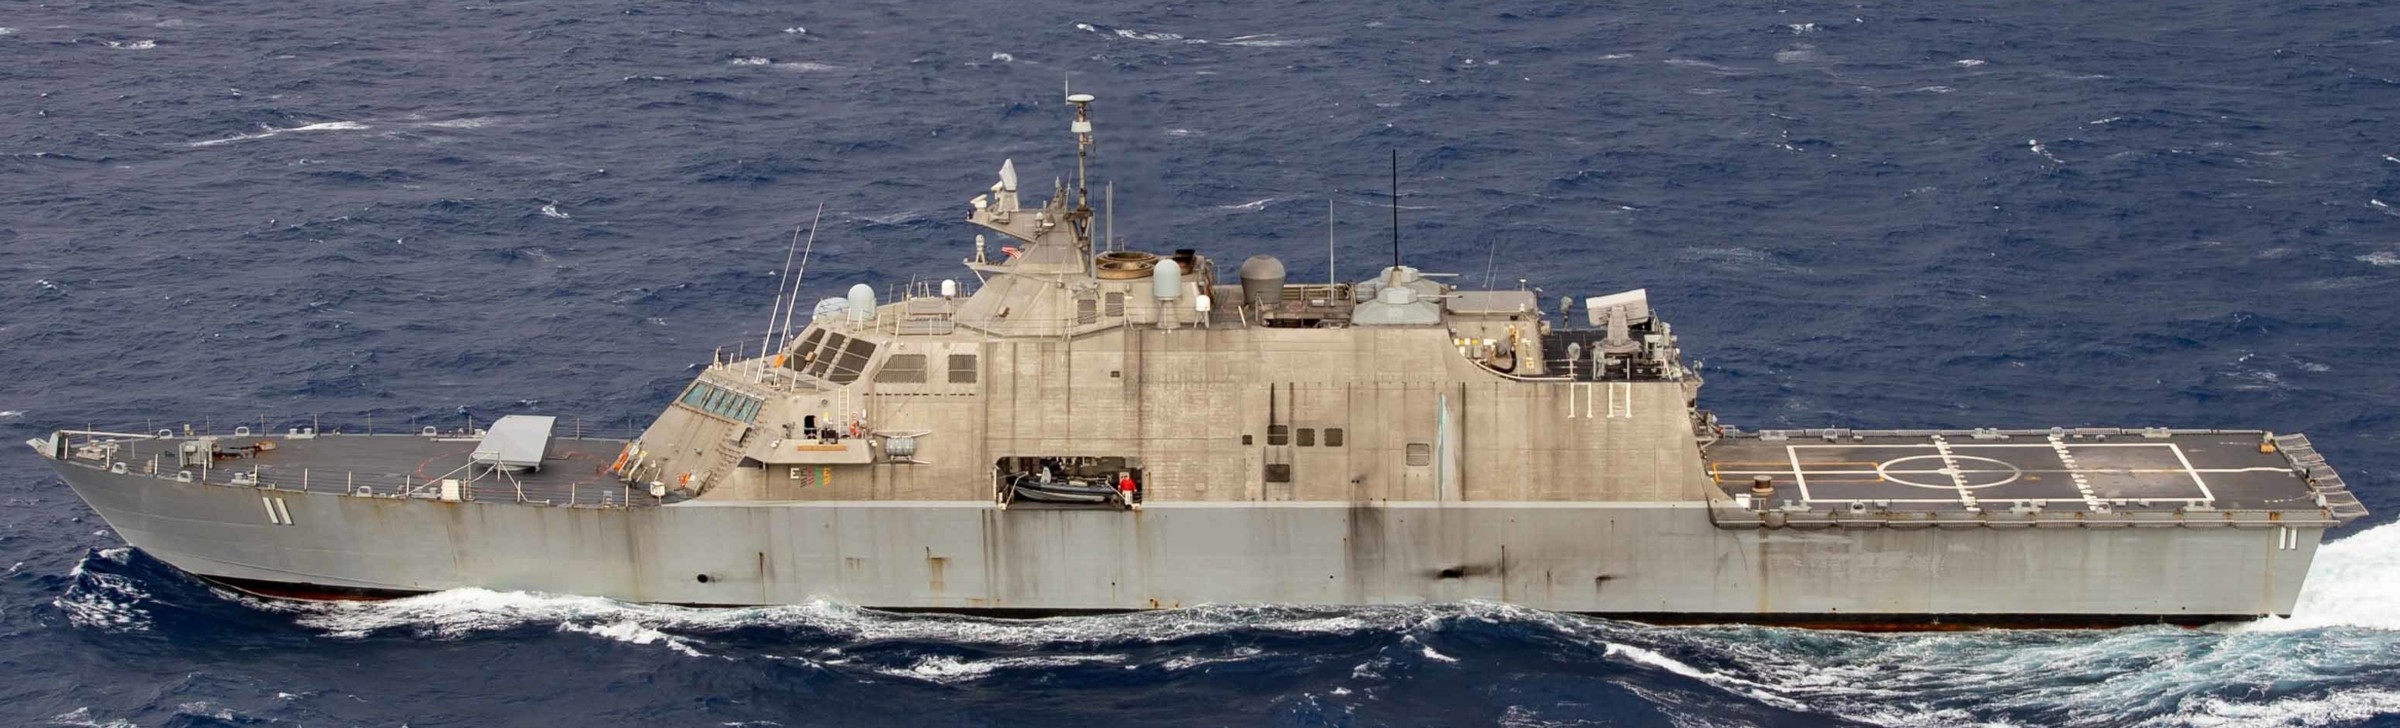 lcs-11 uss sioux city freedom class littoral combat ship us navy atlantic ocean 65